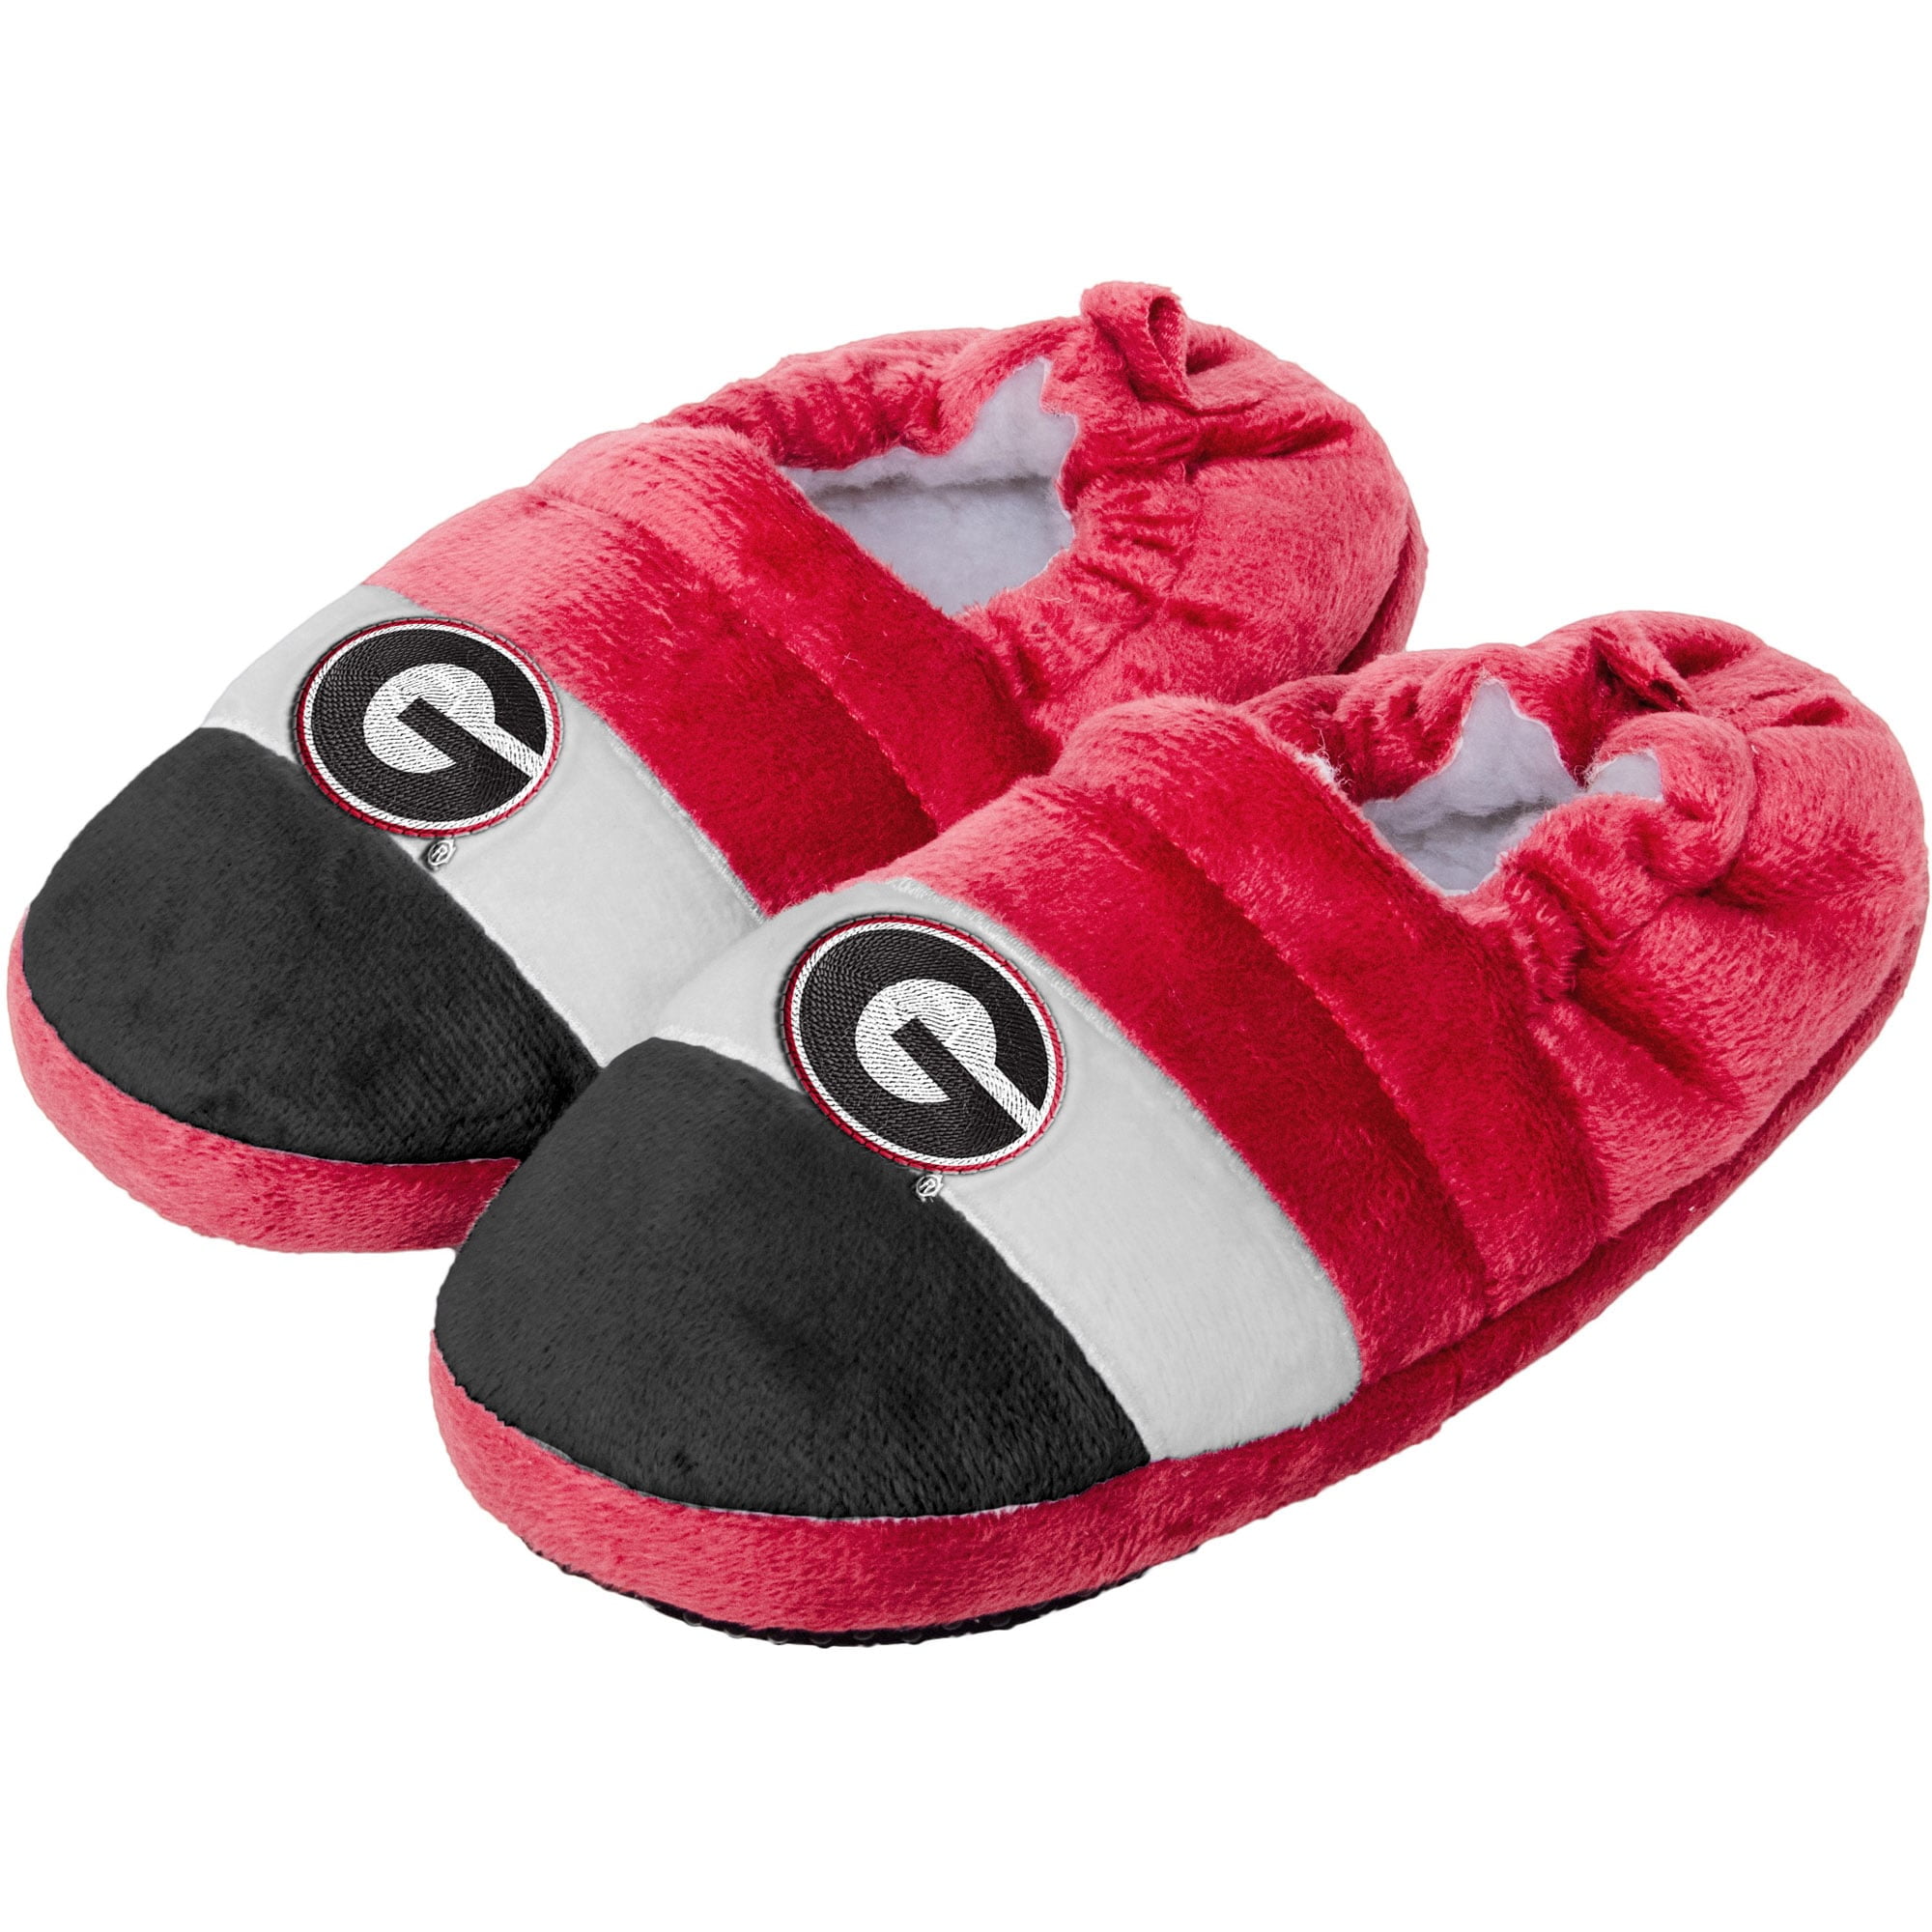 redskins slippers walmart